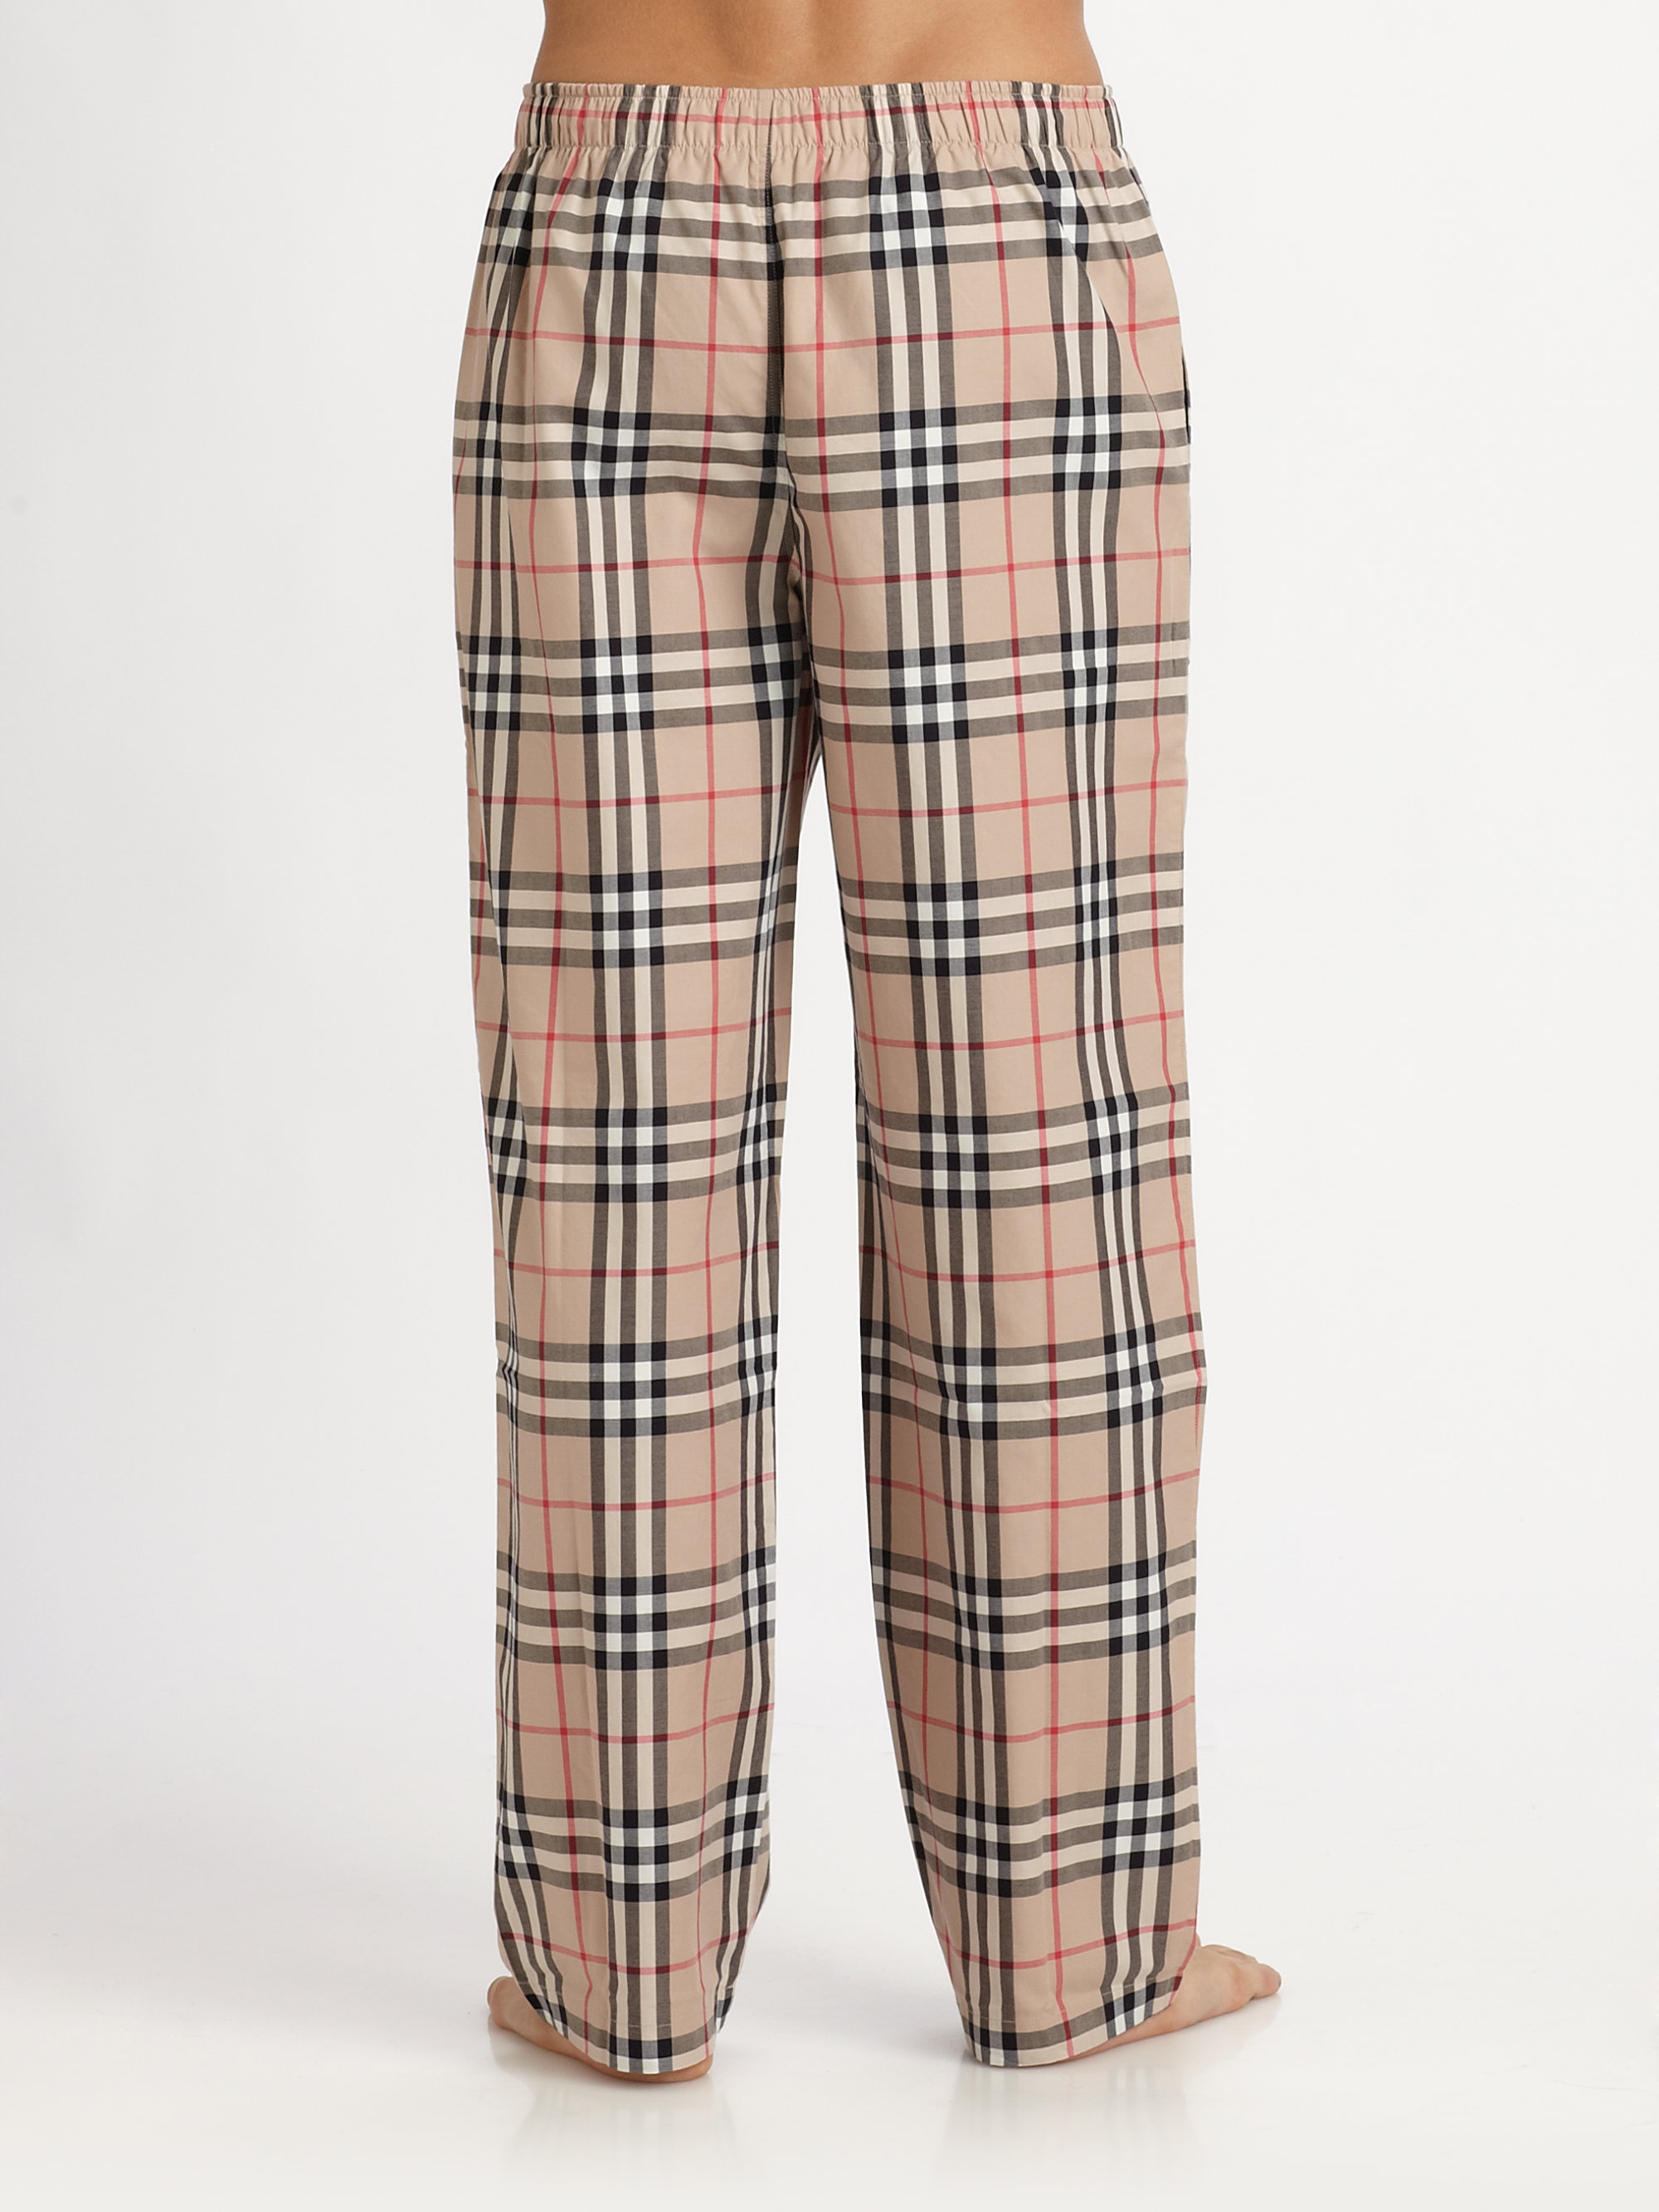 Burberry Check Pajamas | The Art of Mike Mignola